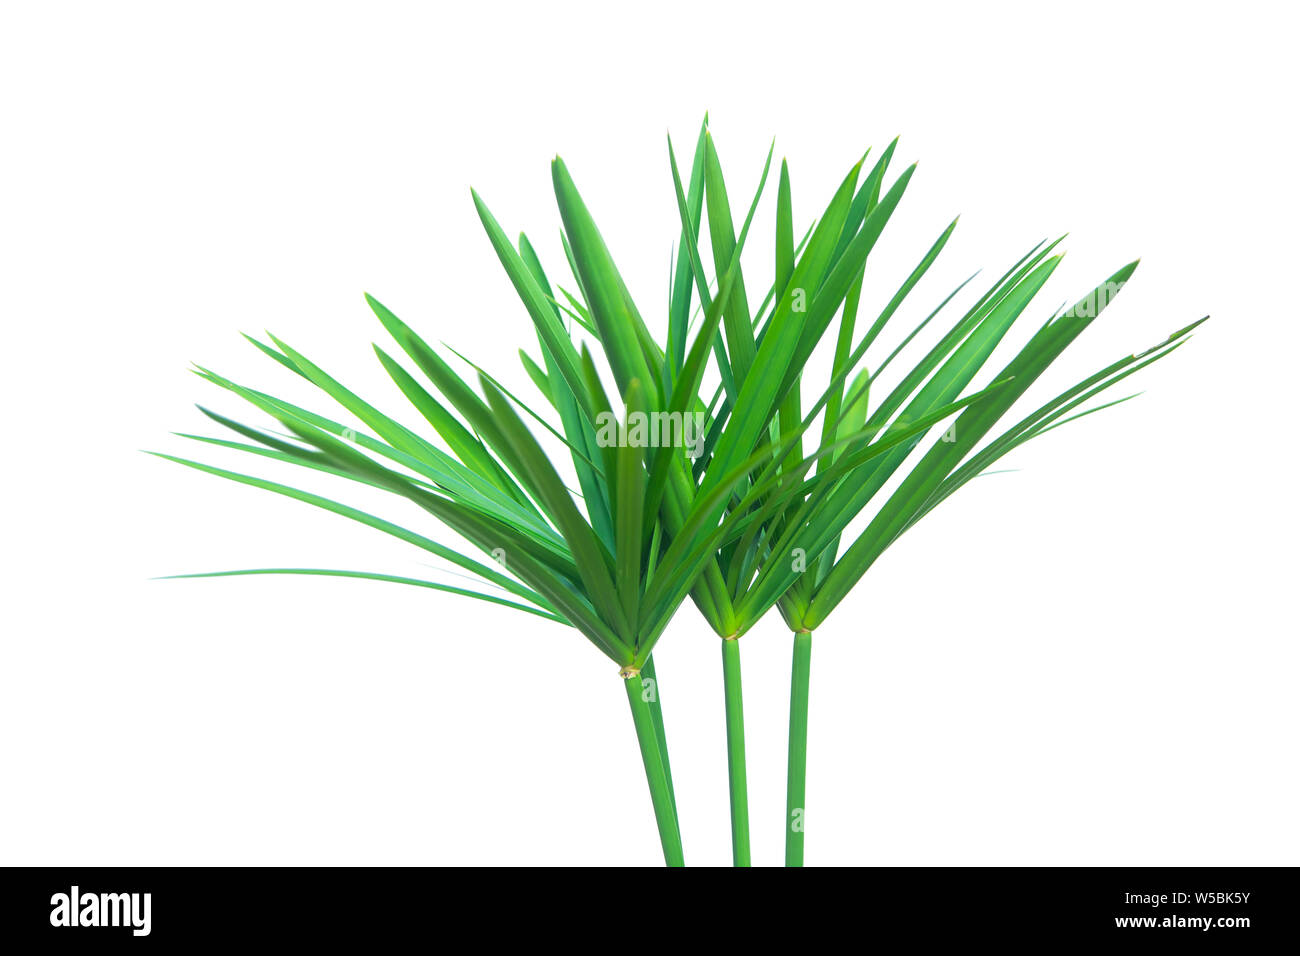 Umbrella plant, Papyrus, Cyperus alternifolius L. Isolated on white backgrund. with clipping path. Stock Photo